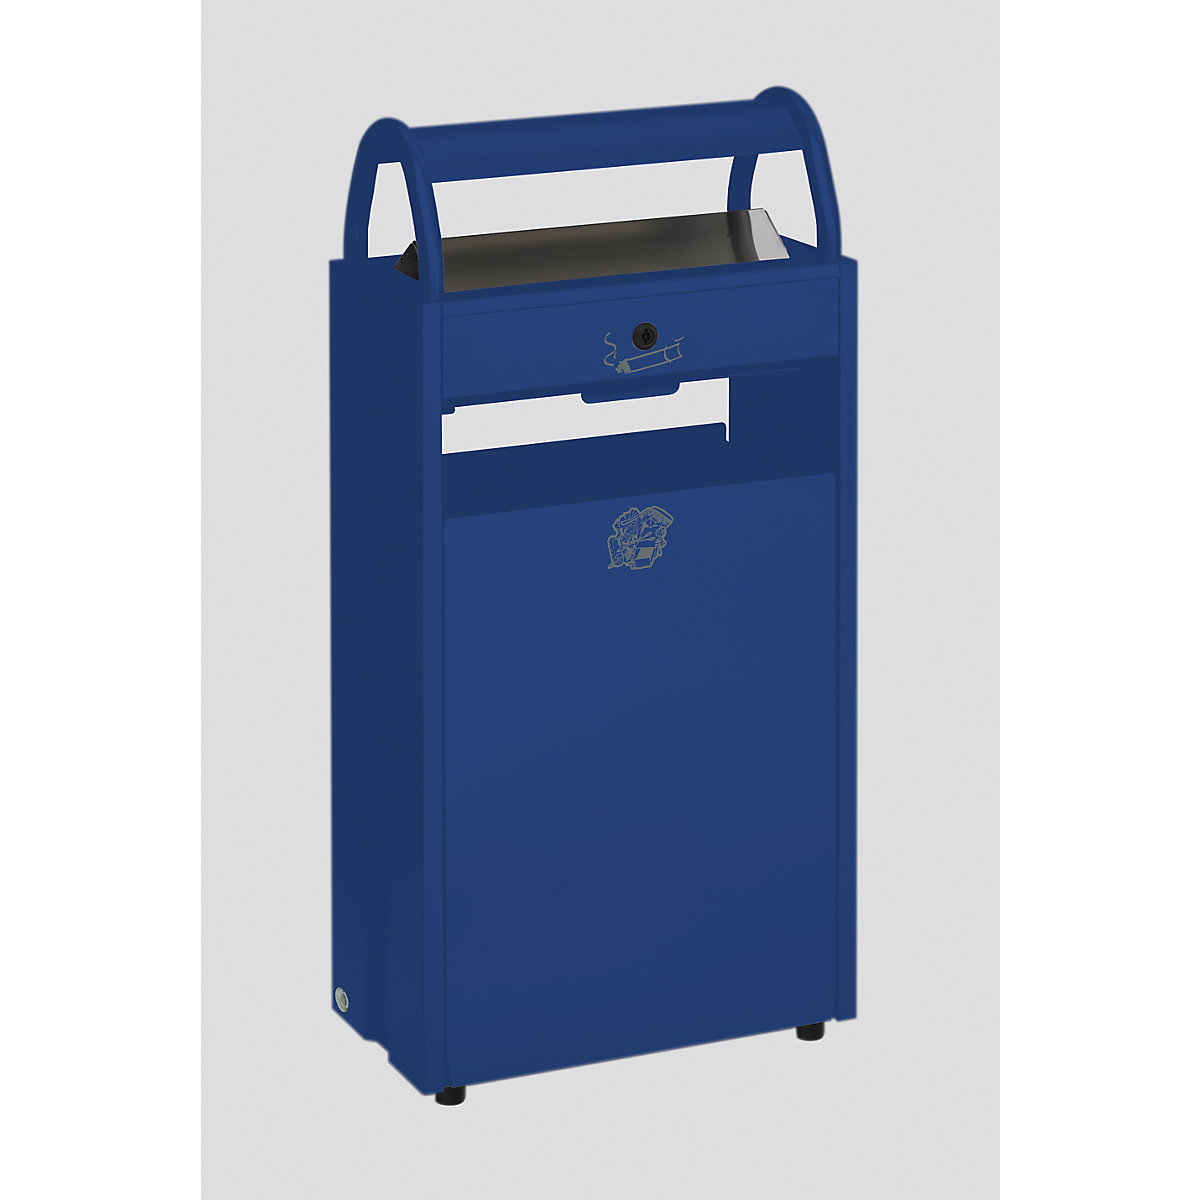 VAR – Nádoba na odpad s popelníkem, objem 60 l, š x v x h 480 x 960 x 250 mm, modrá RAL 5010